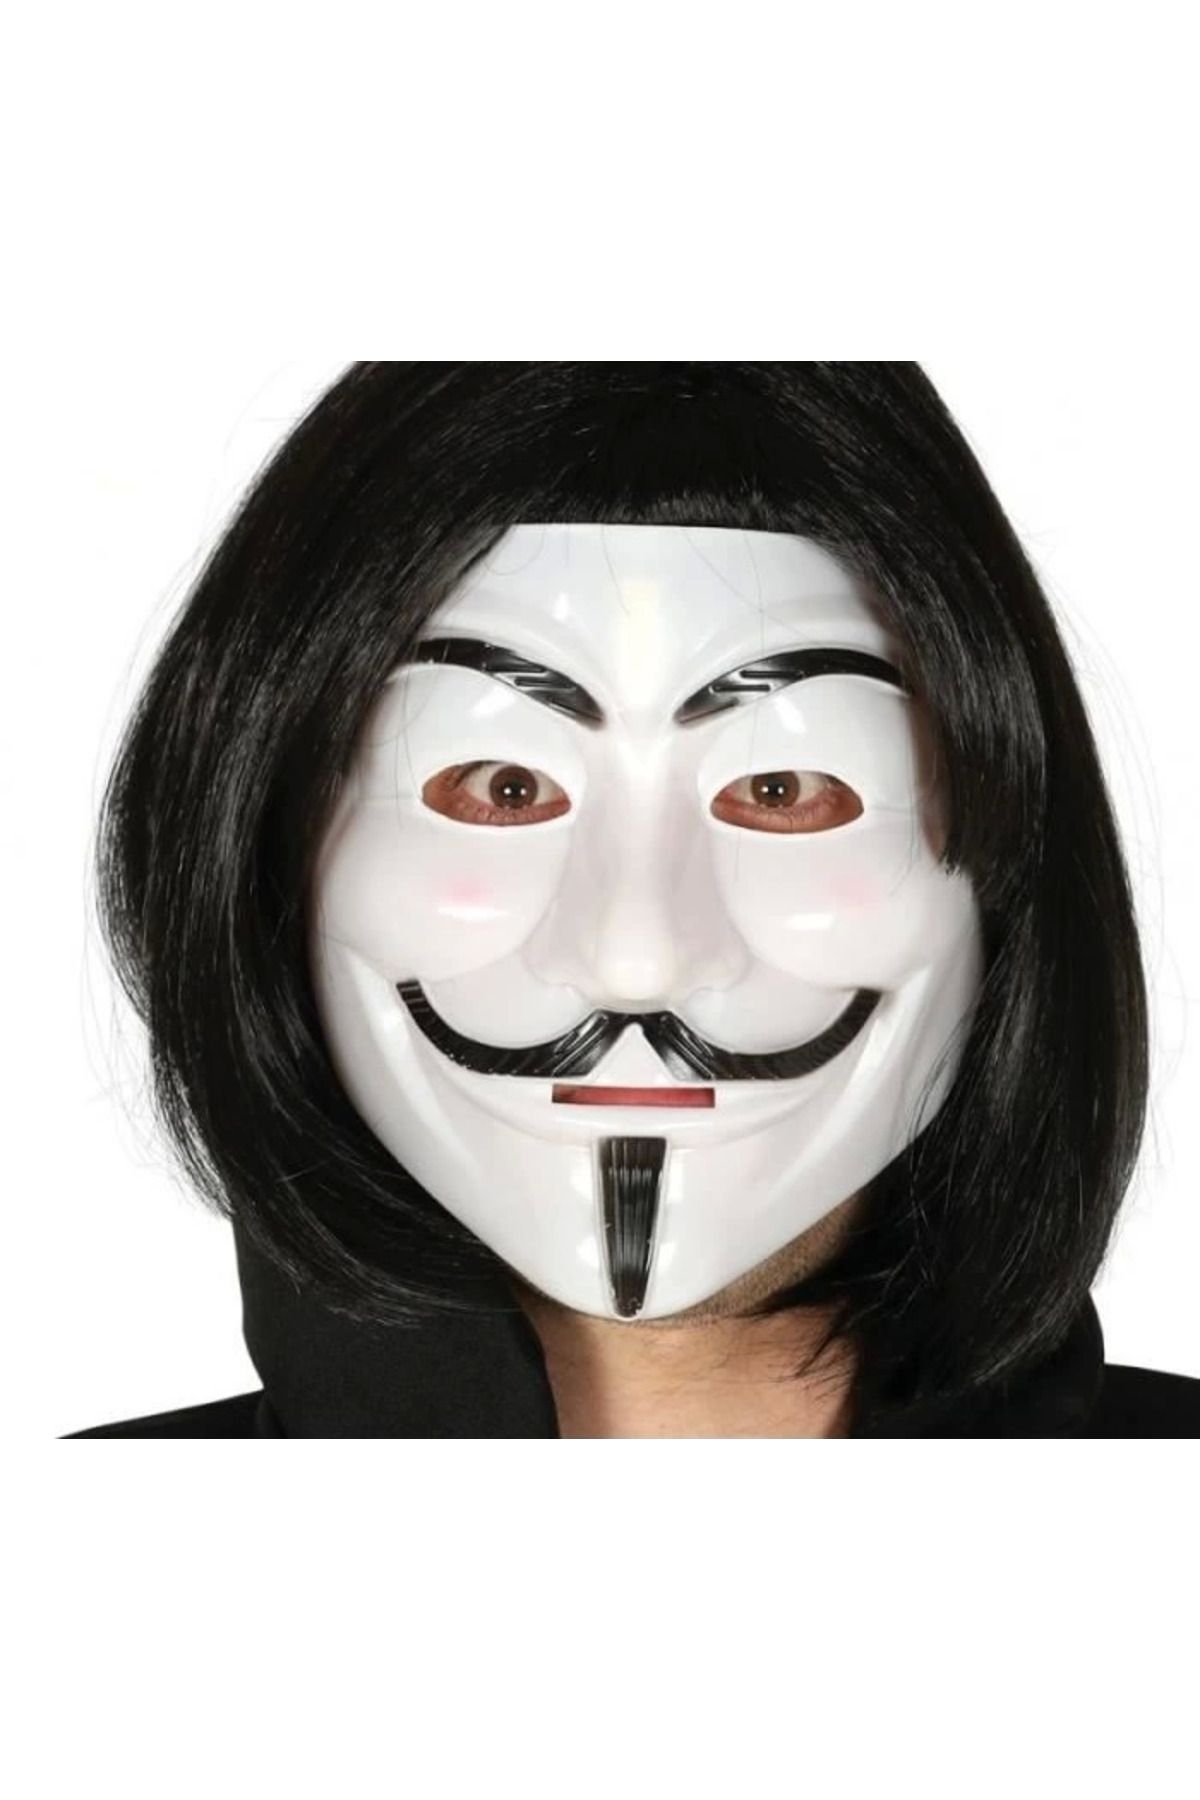 Wisdom Rain Siyah Renk Takma Kısa Saç Ve V For Vendetta Maskesi Anonymous Maskesi